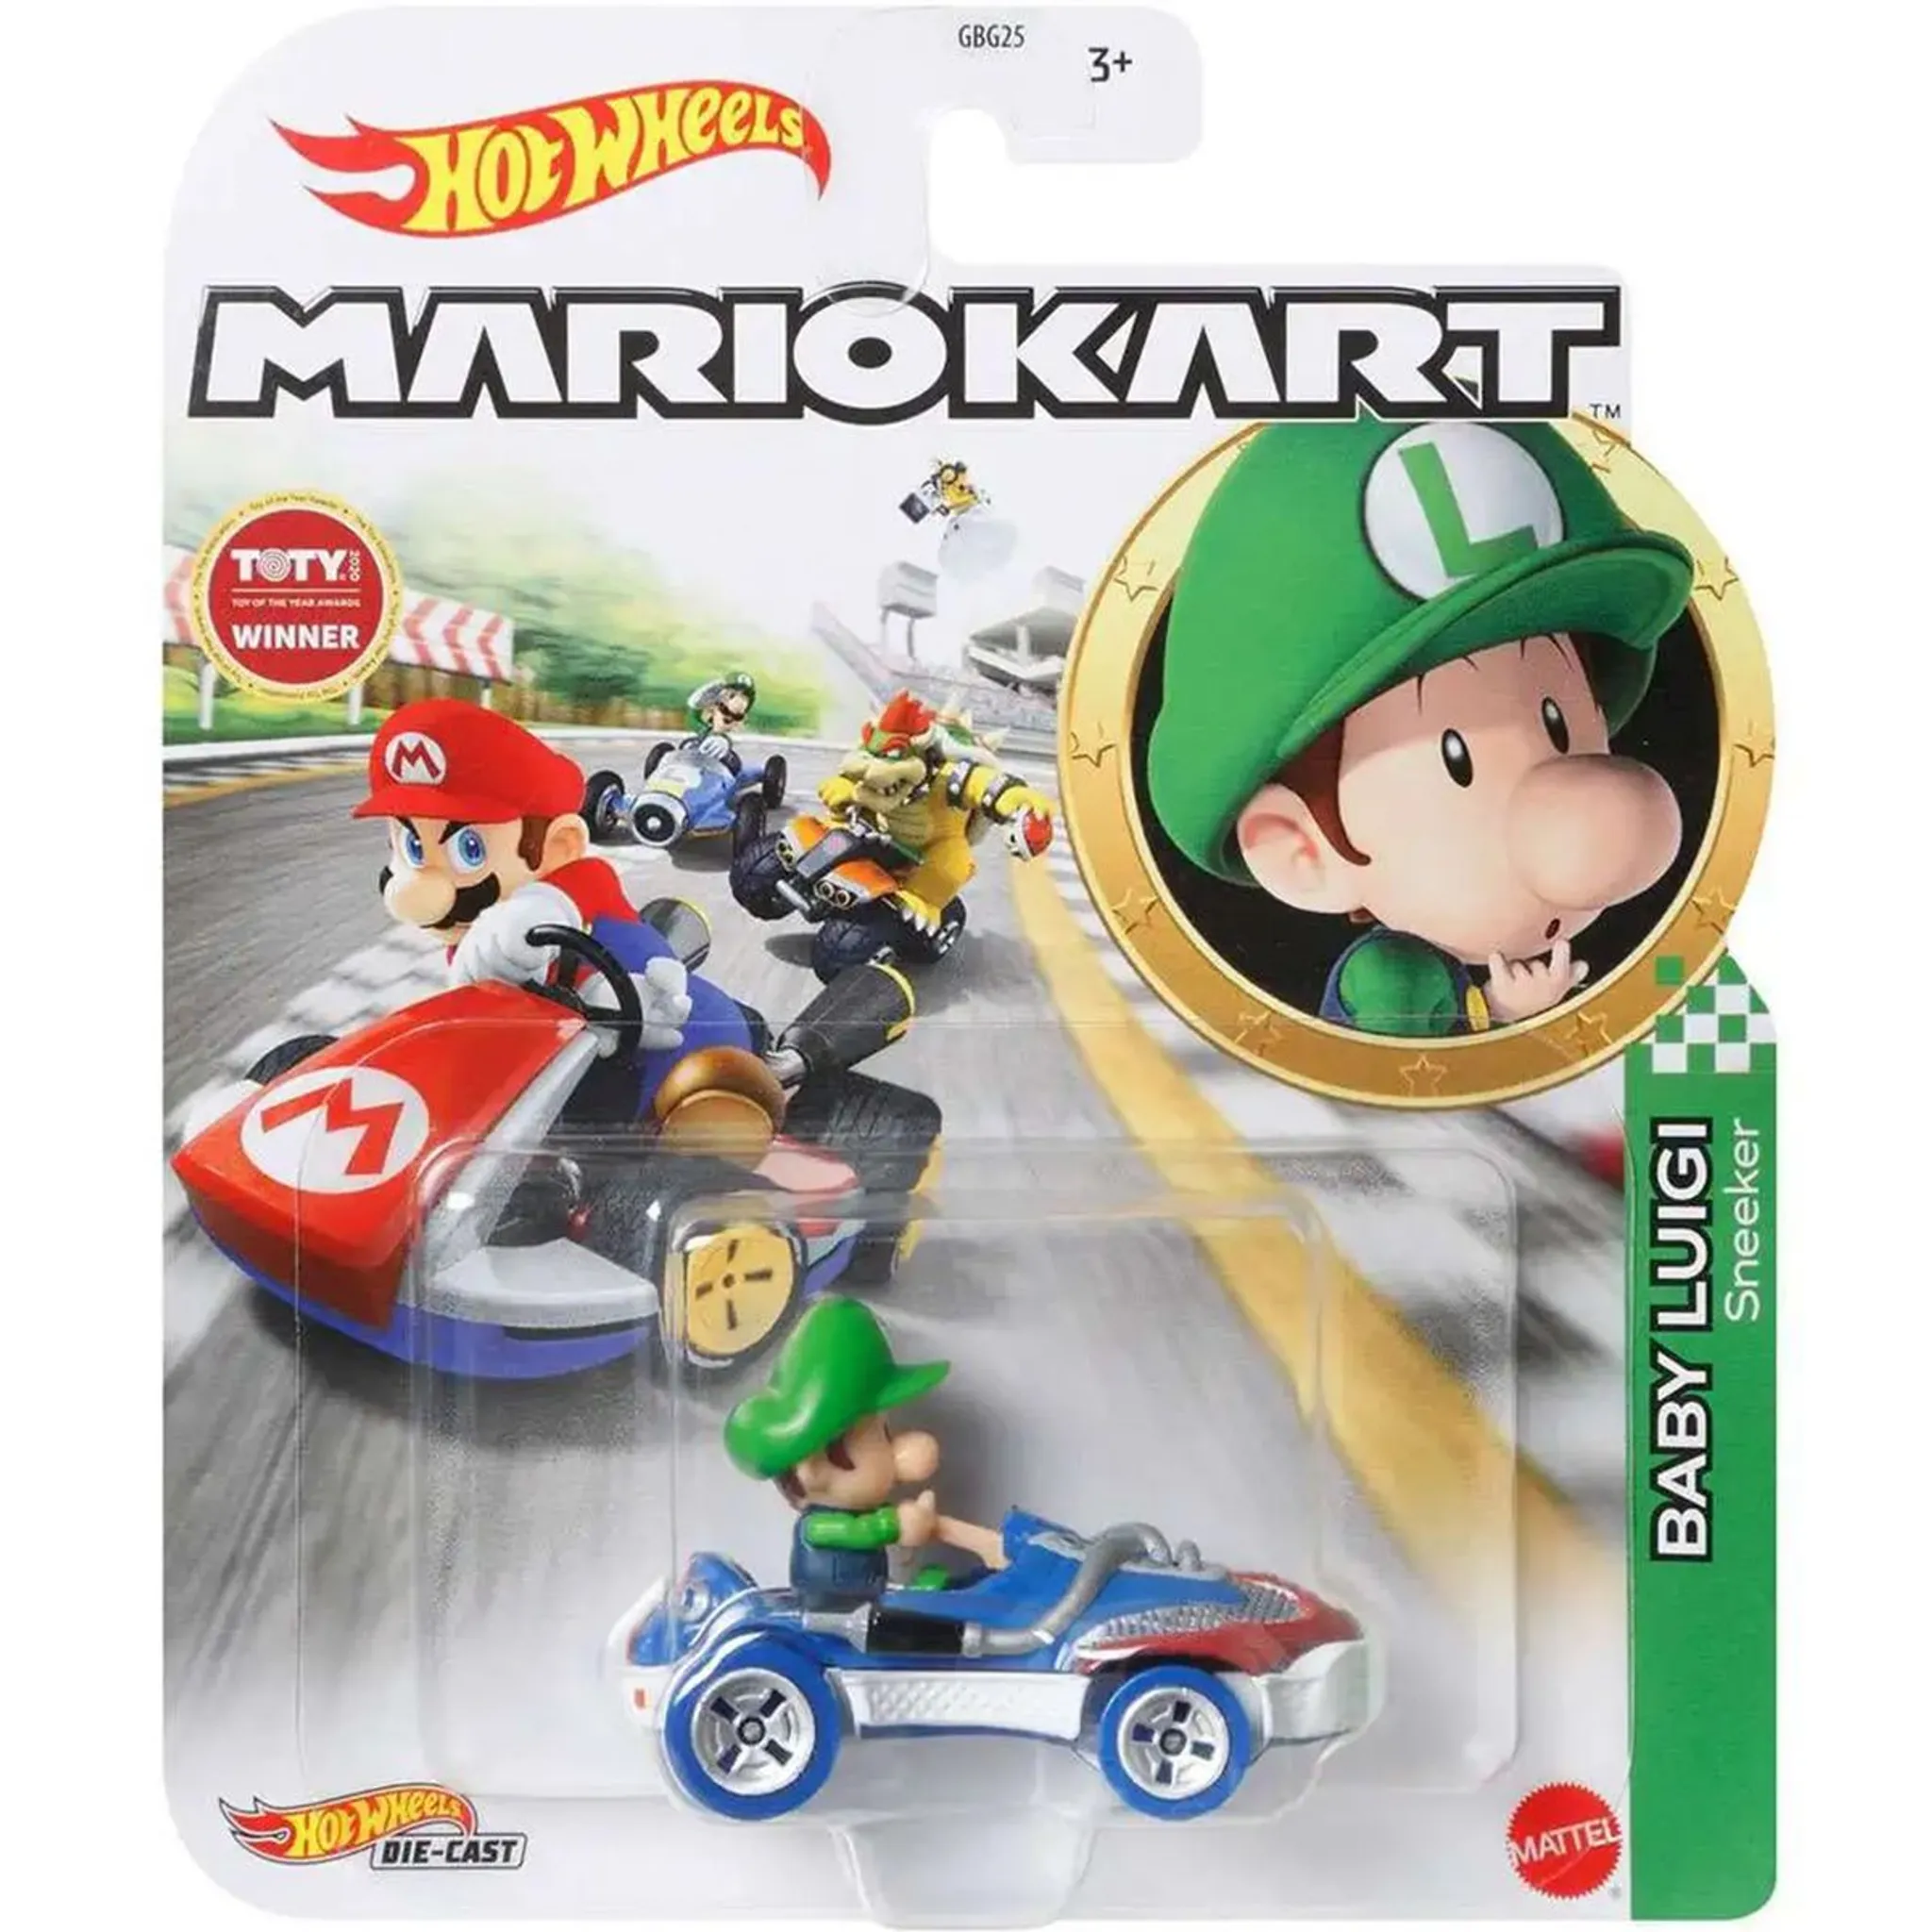 Mattel GBG25; HDB28 - Hot Wheels Mario Kart